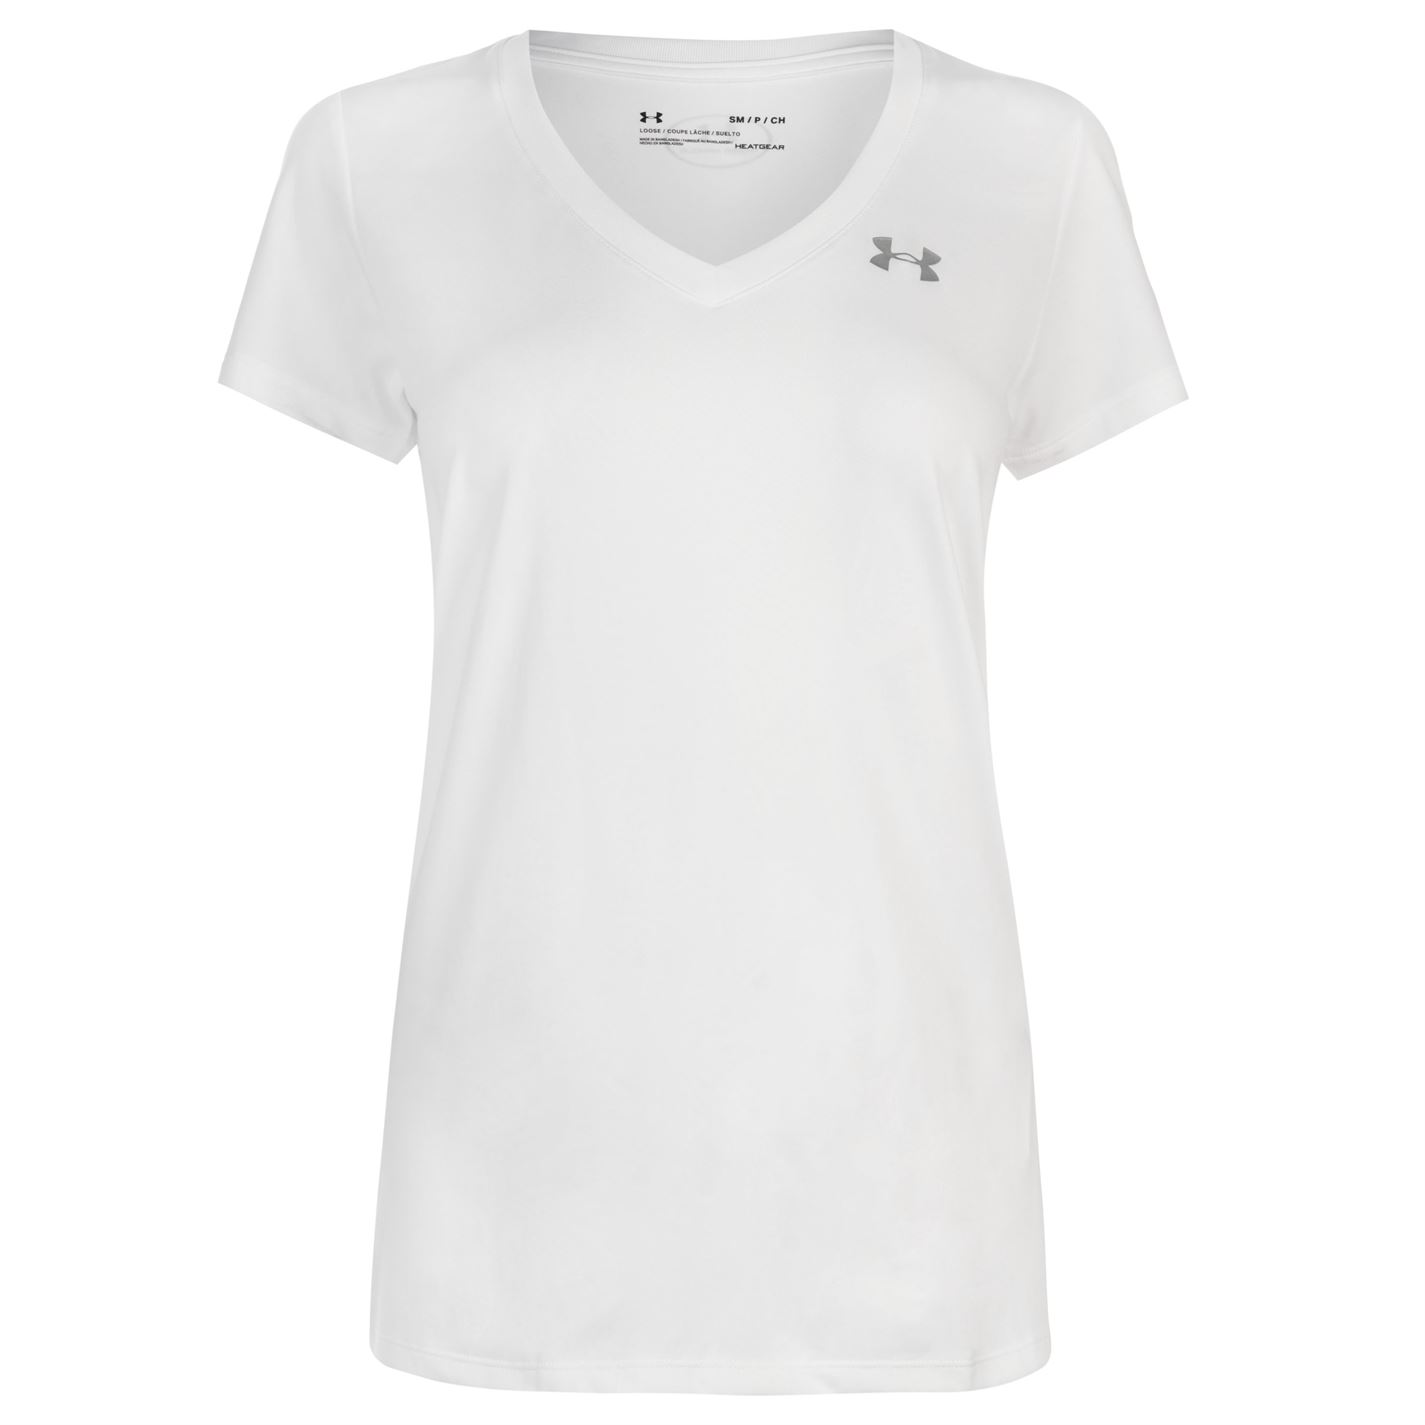 dámské tričko UNDER ARMOUR - WHITE - XL